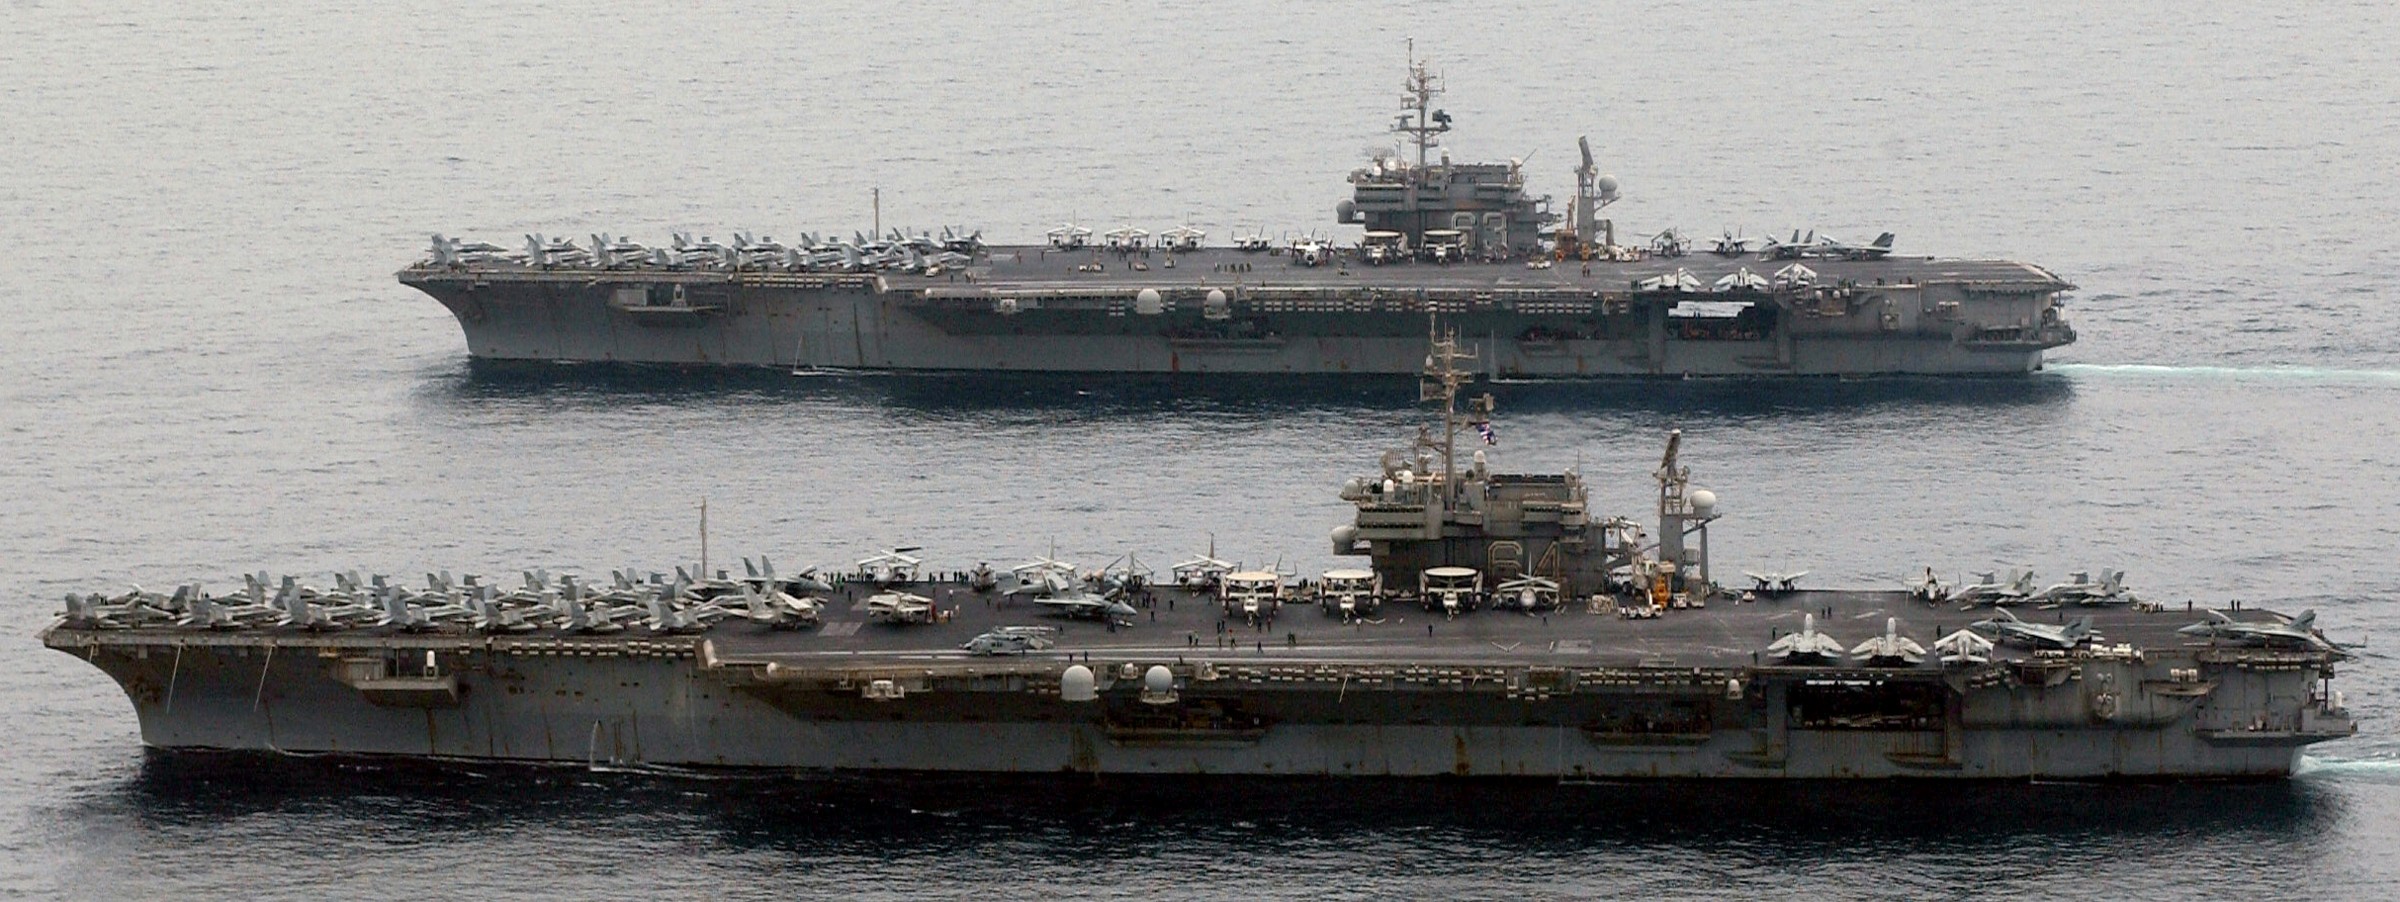 cv-64 uss constellation kitty hawk class aircraft carrier air wing cvw-2 us navy enduring freedom 2003 12